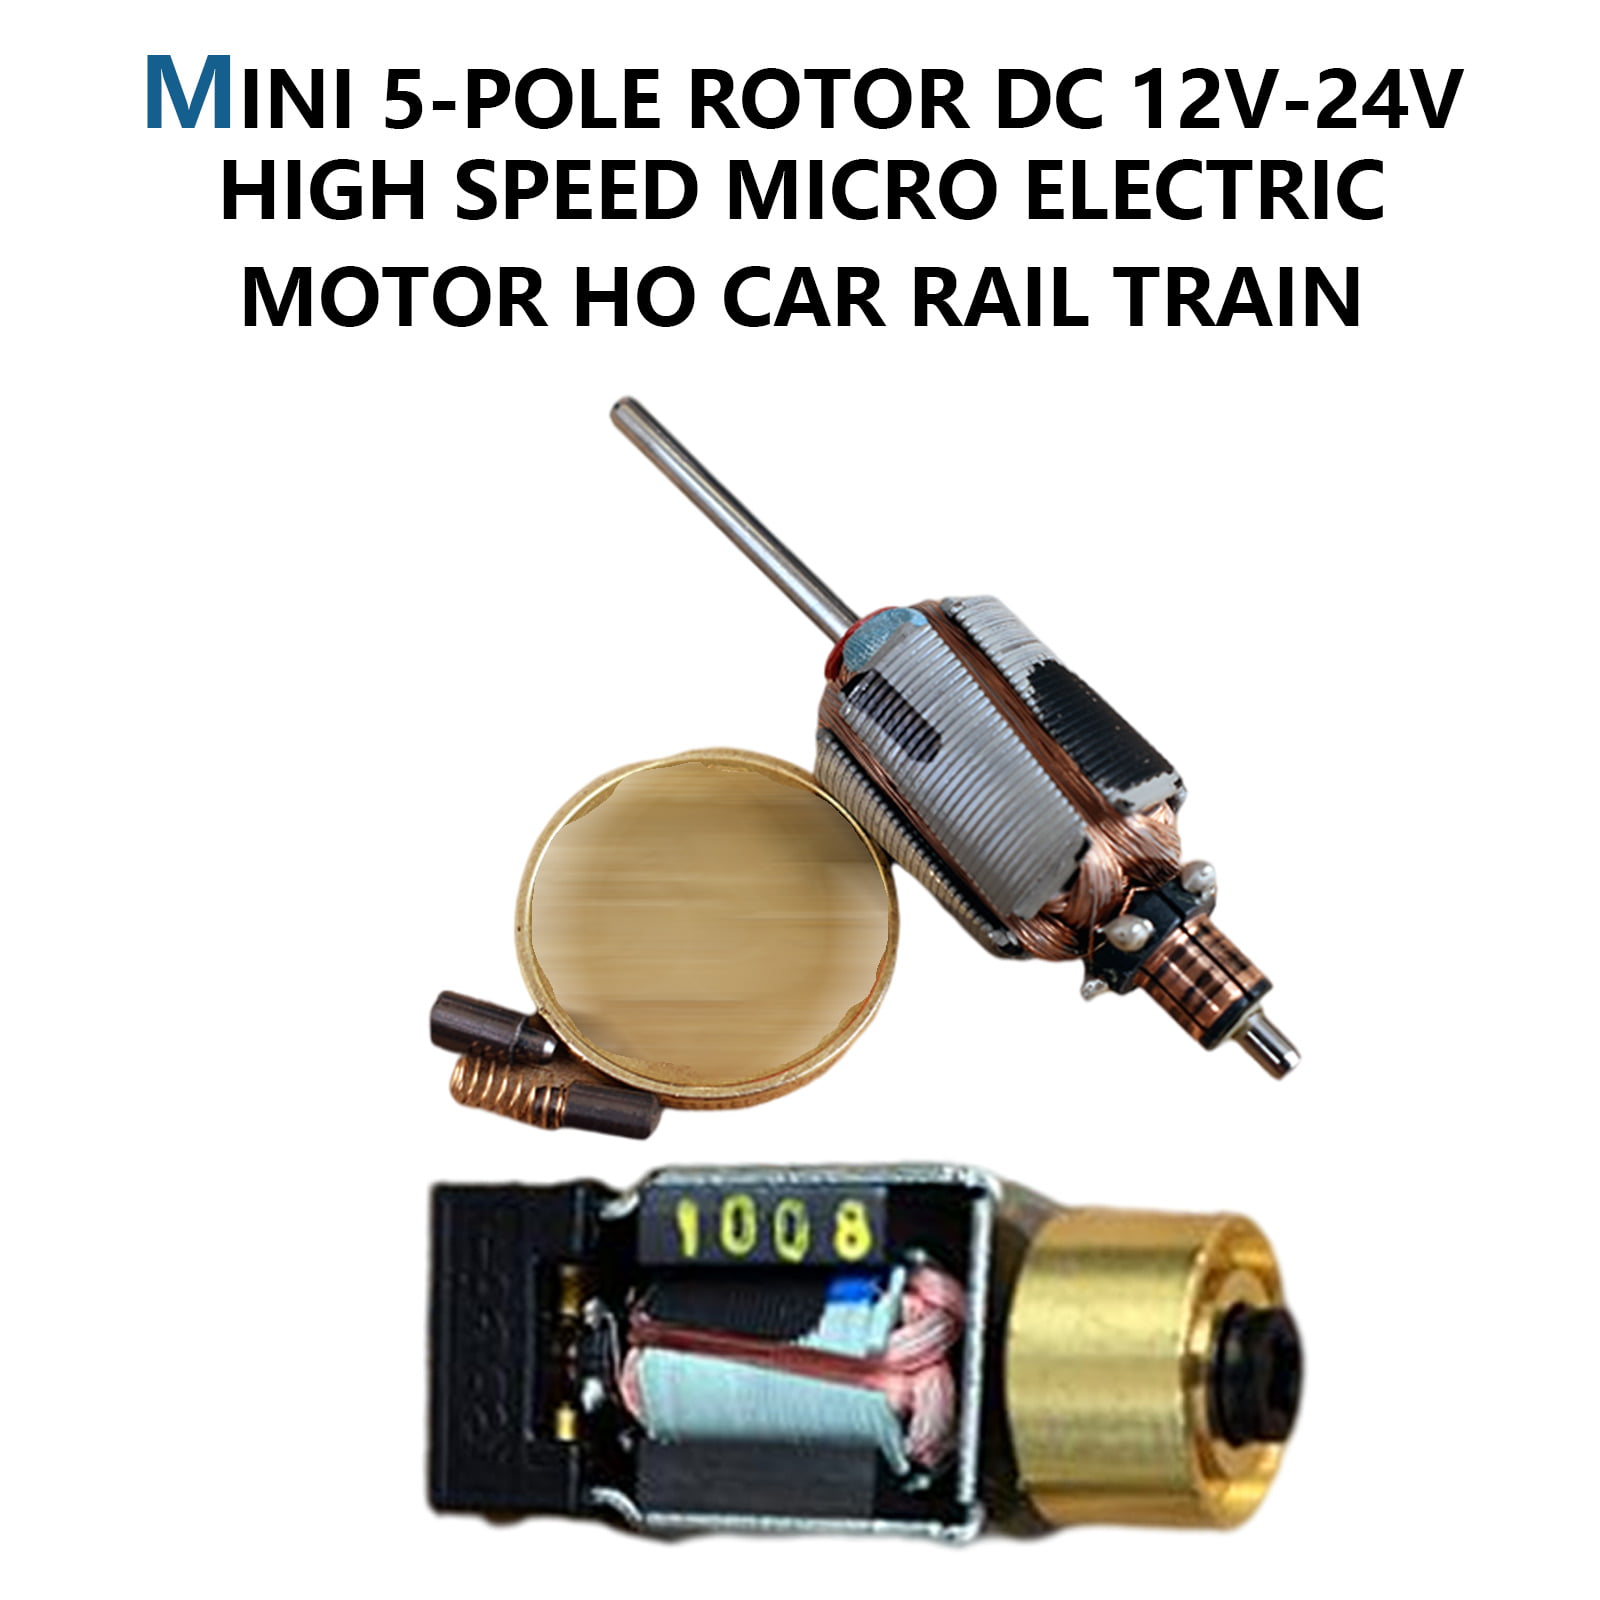 DC12V-24V High Speed Mini 5-pole Rotor Motor Dual Flywheel HO Car Rail Train Toy 